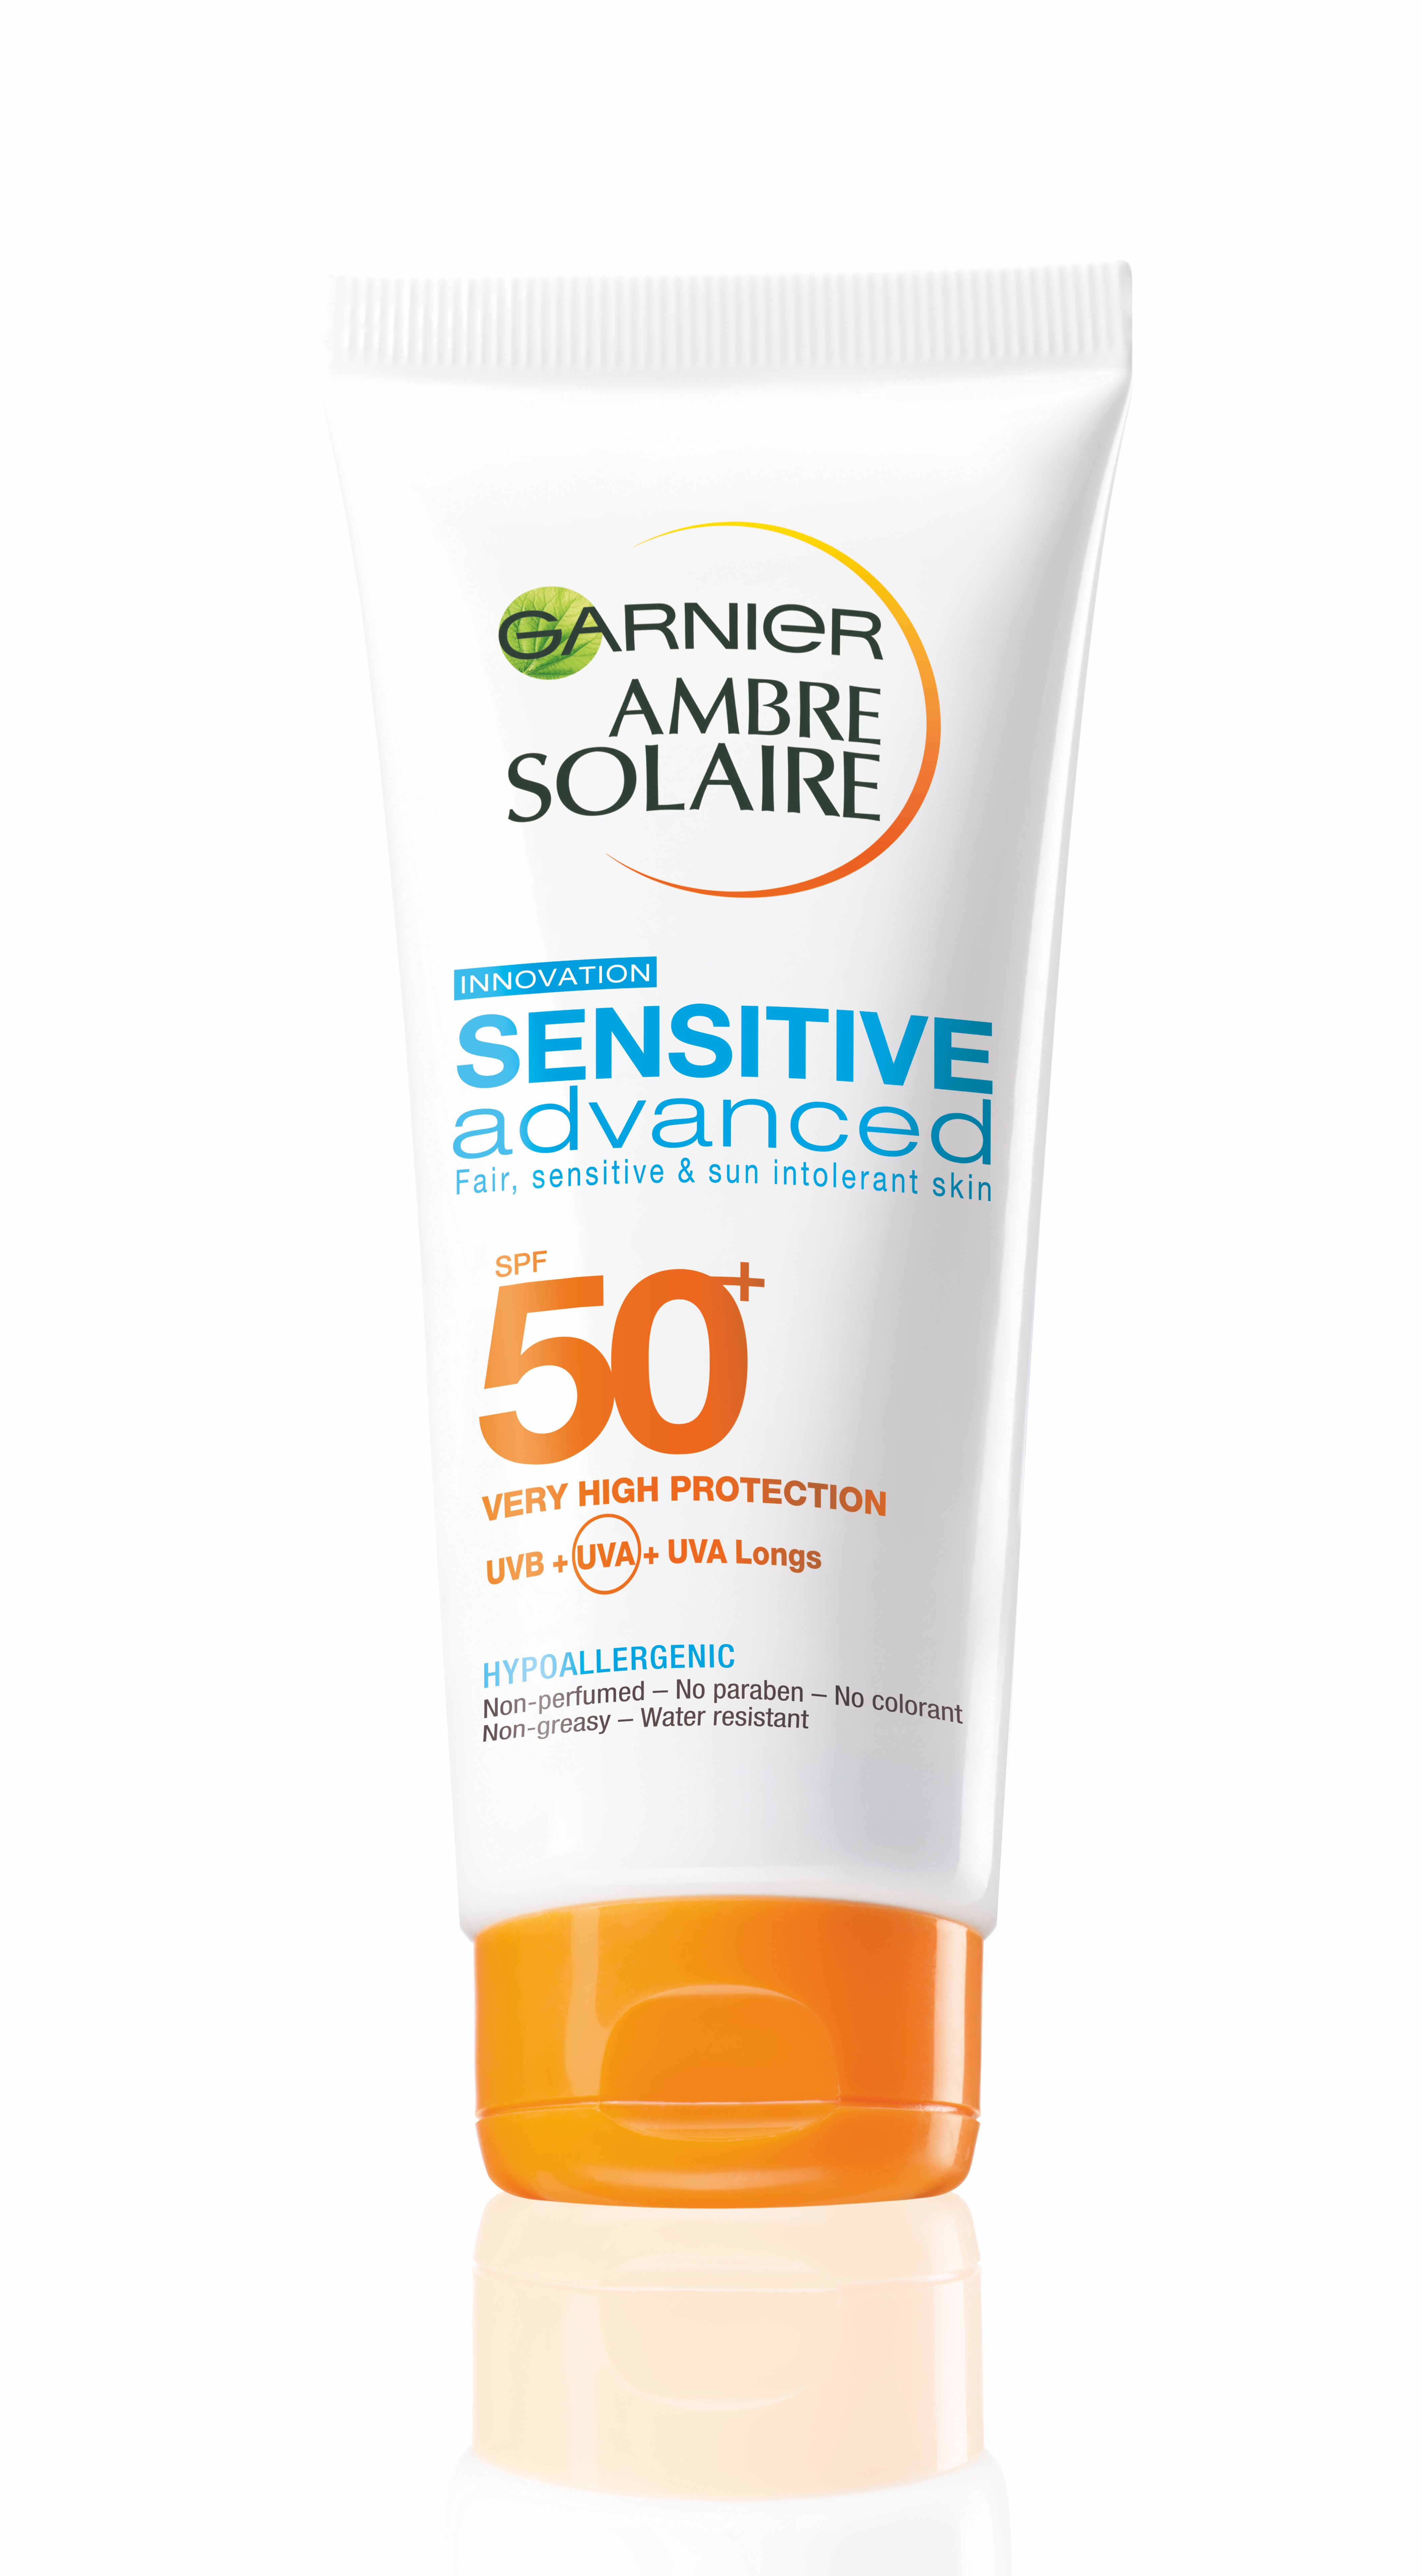 Garnier Ambre Solaire Sensitive Advanced SPF 50 krém 200 ml Garnier